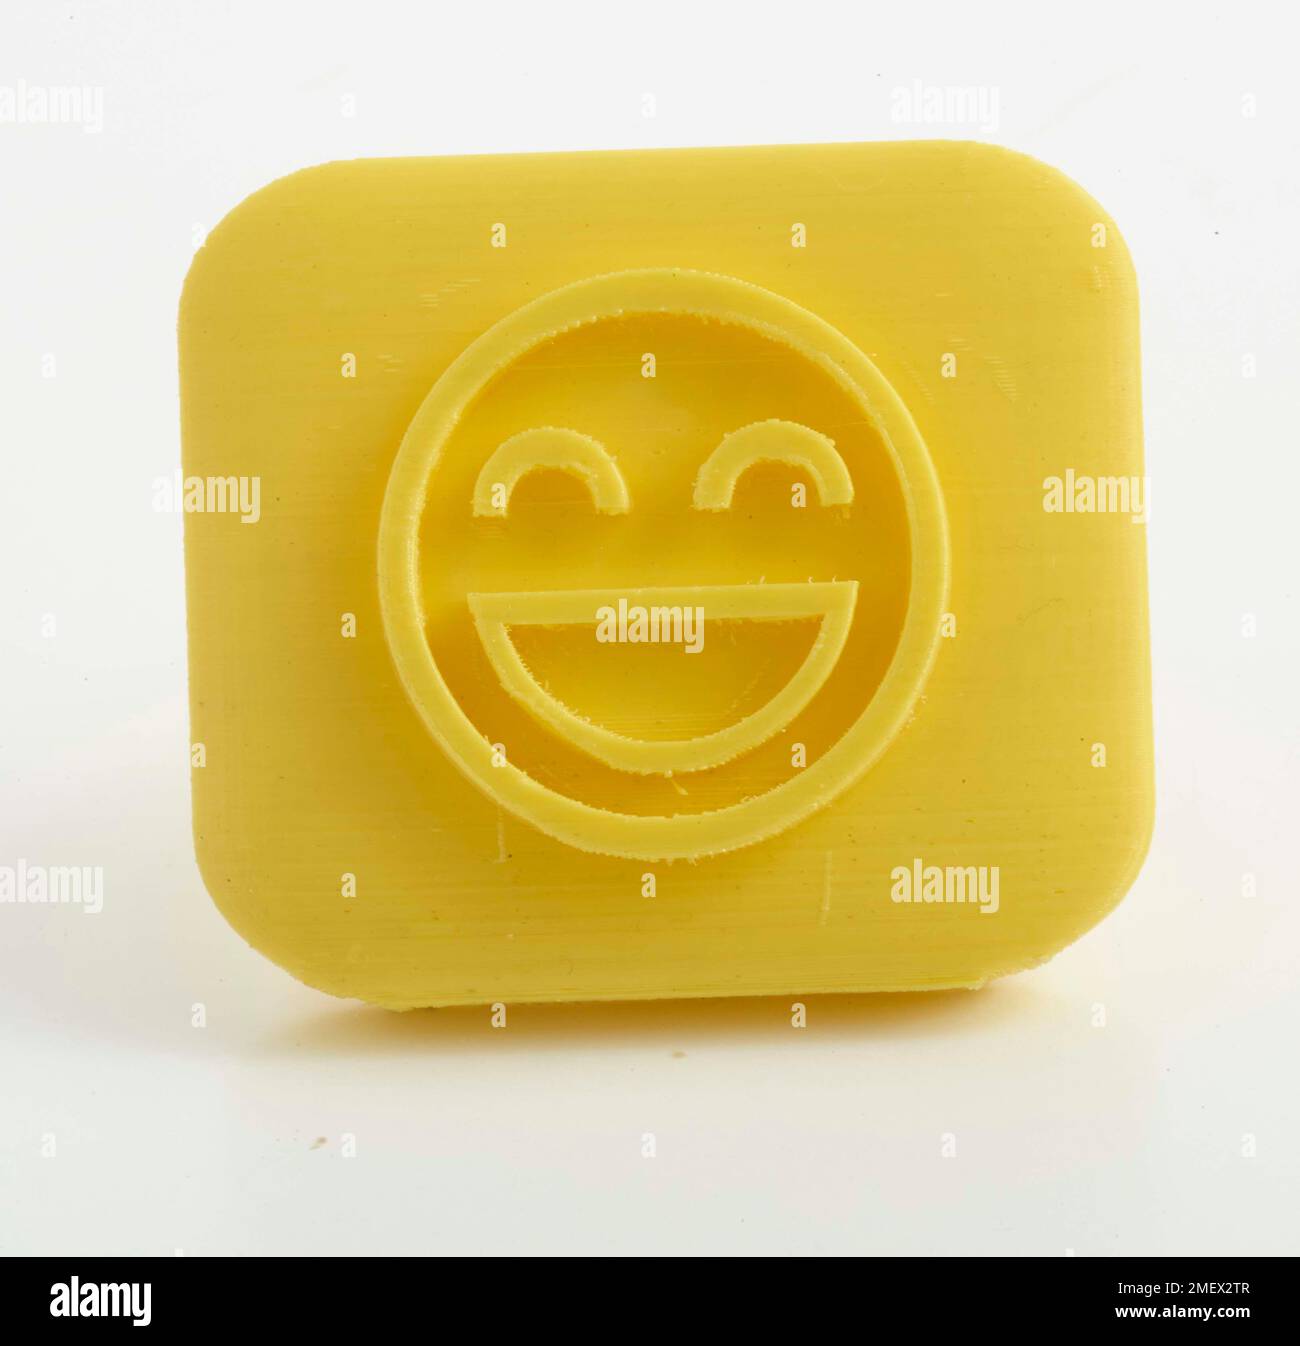 3D printed emoji stamp Stock Photo